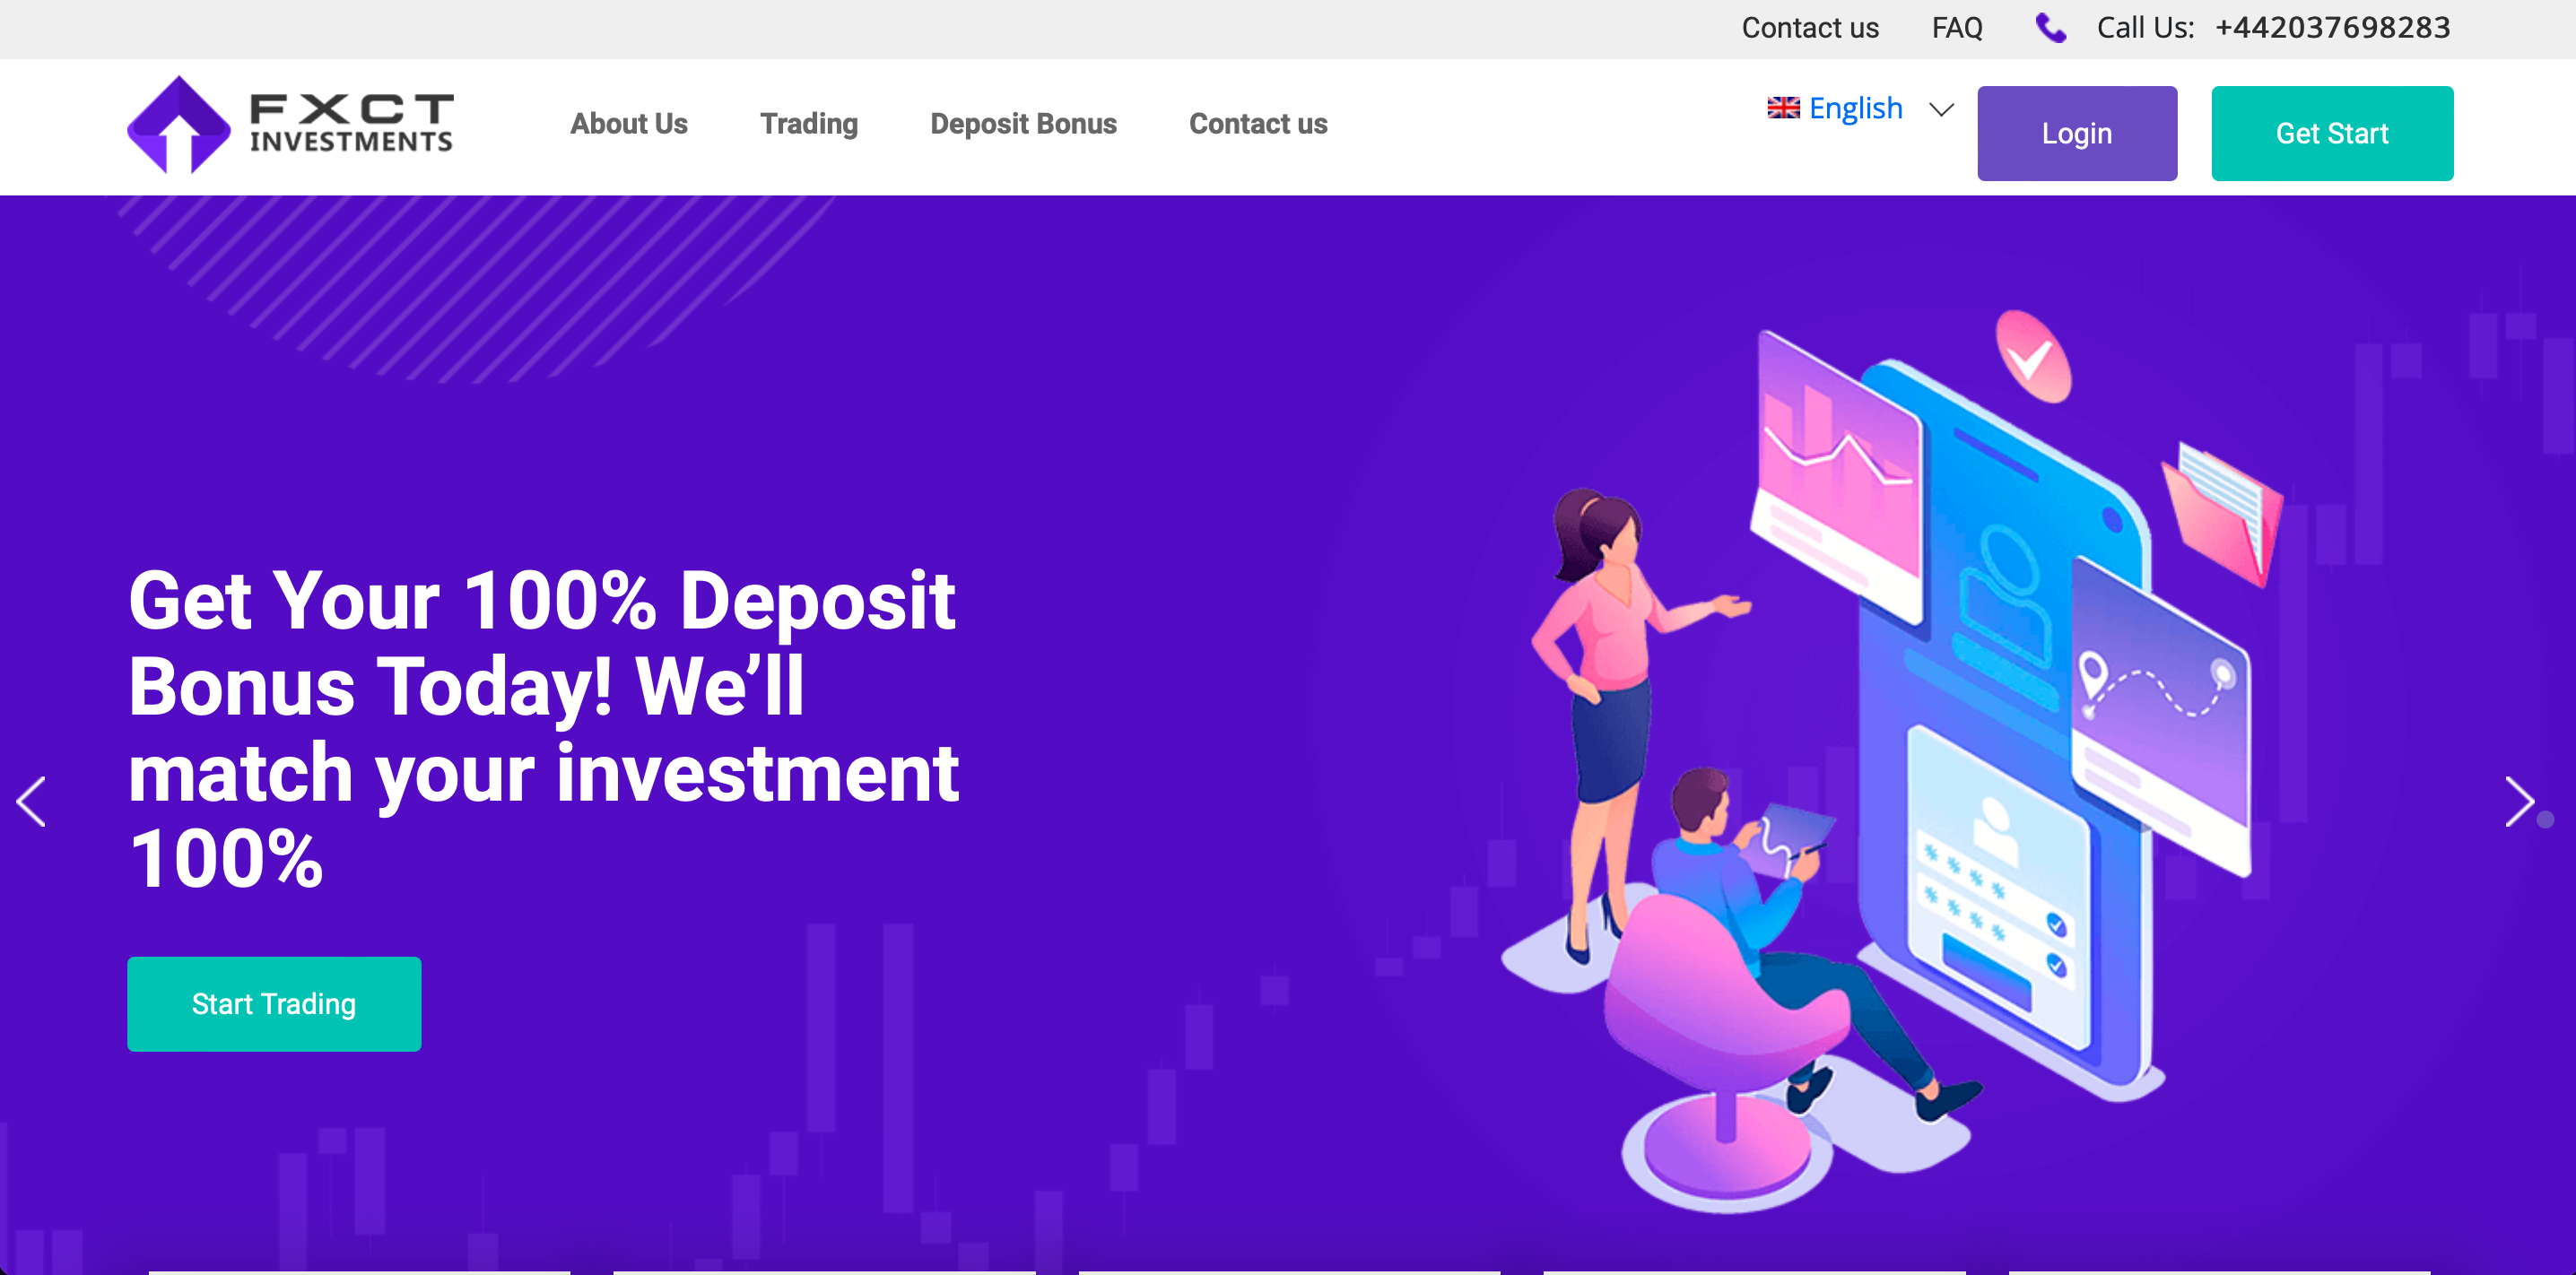 FXCT Investment website